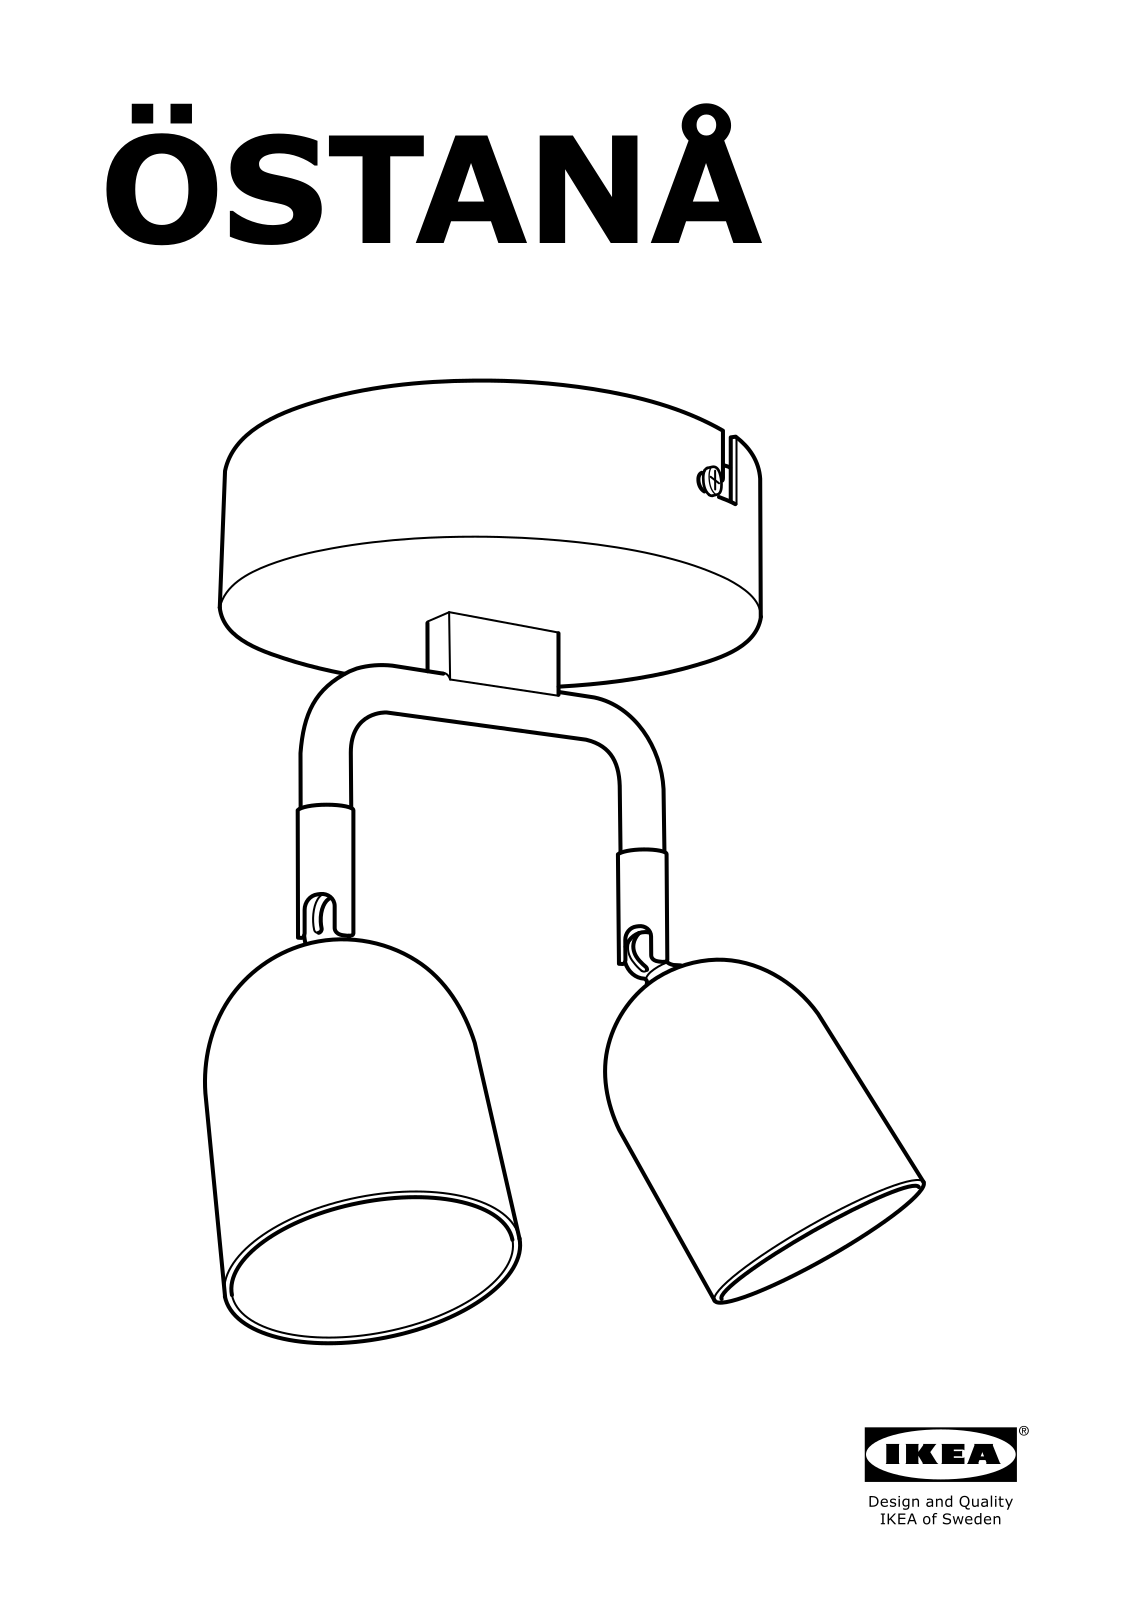 IKEA OSTANA User Manual